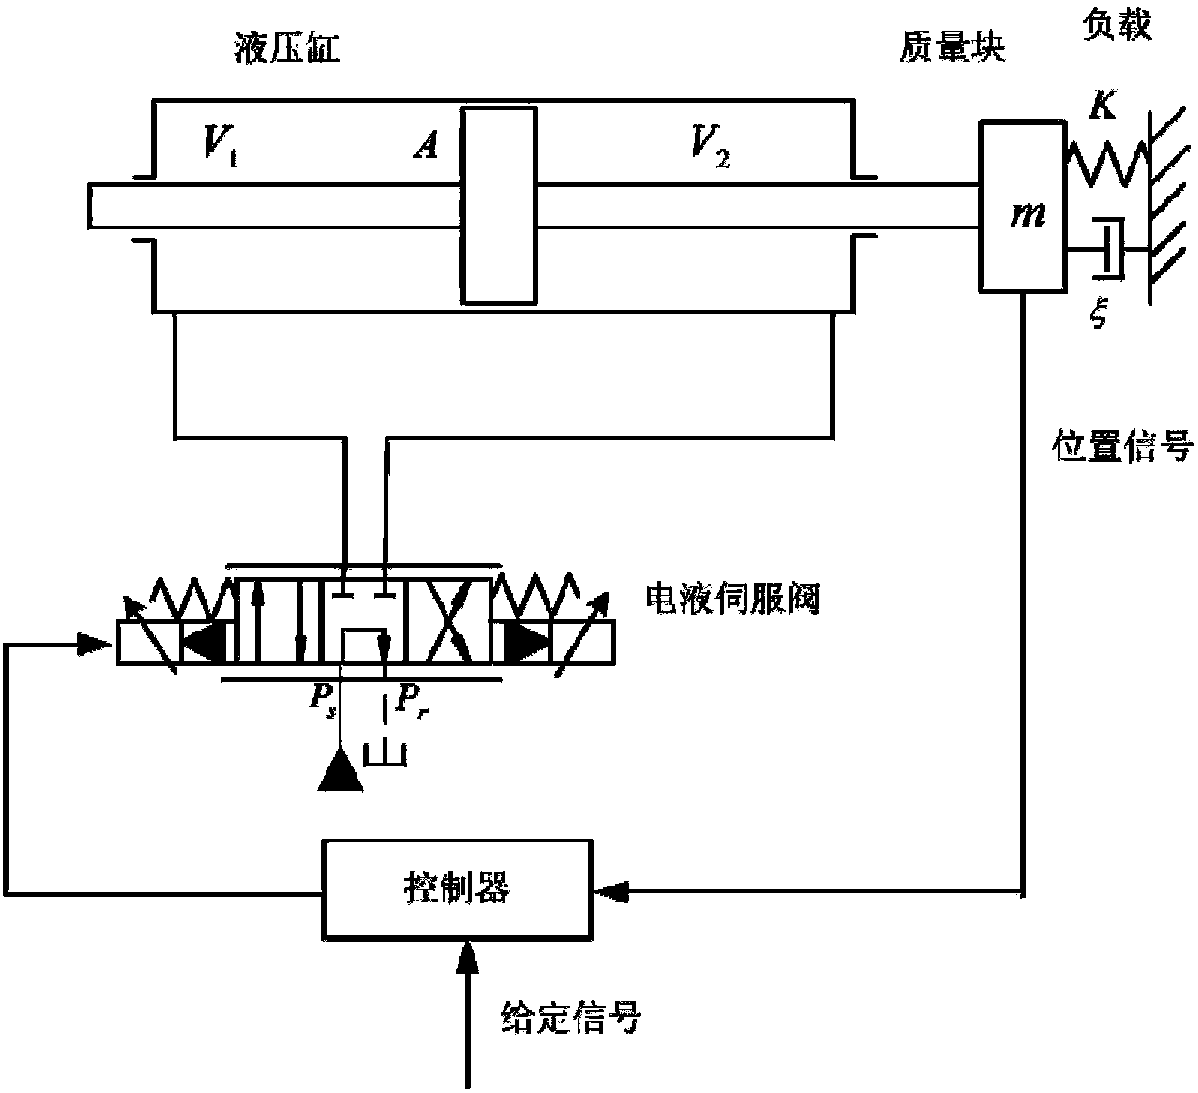 A sliding mode control method for electro-hydraulic servo system